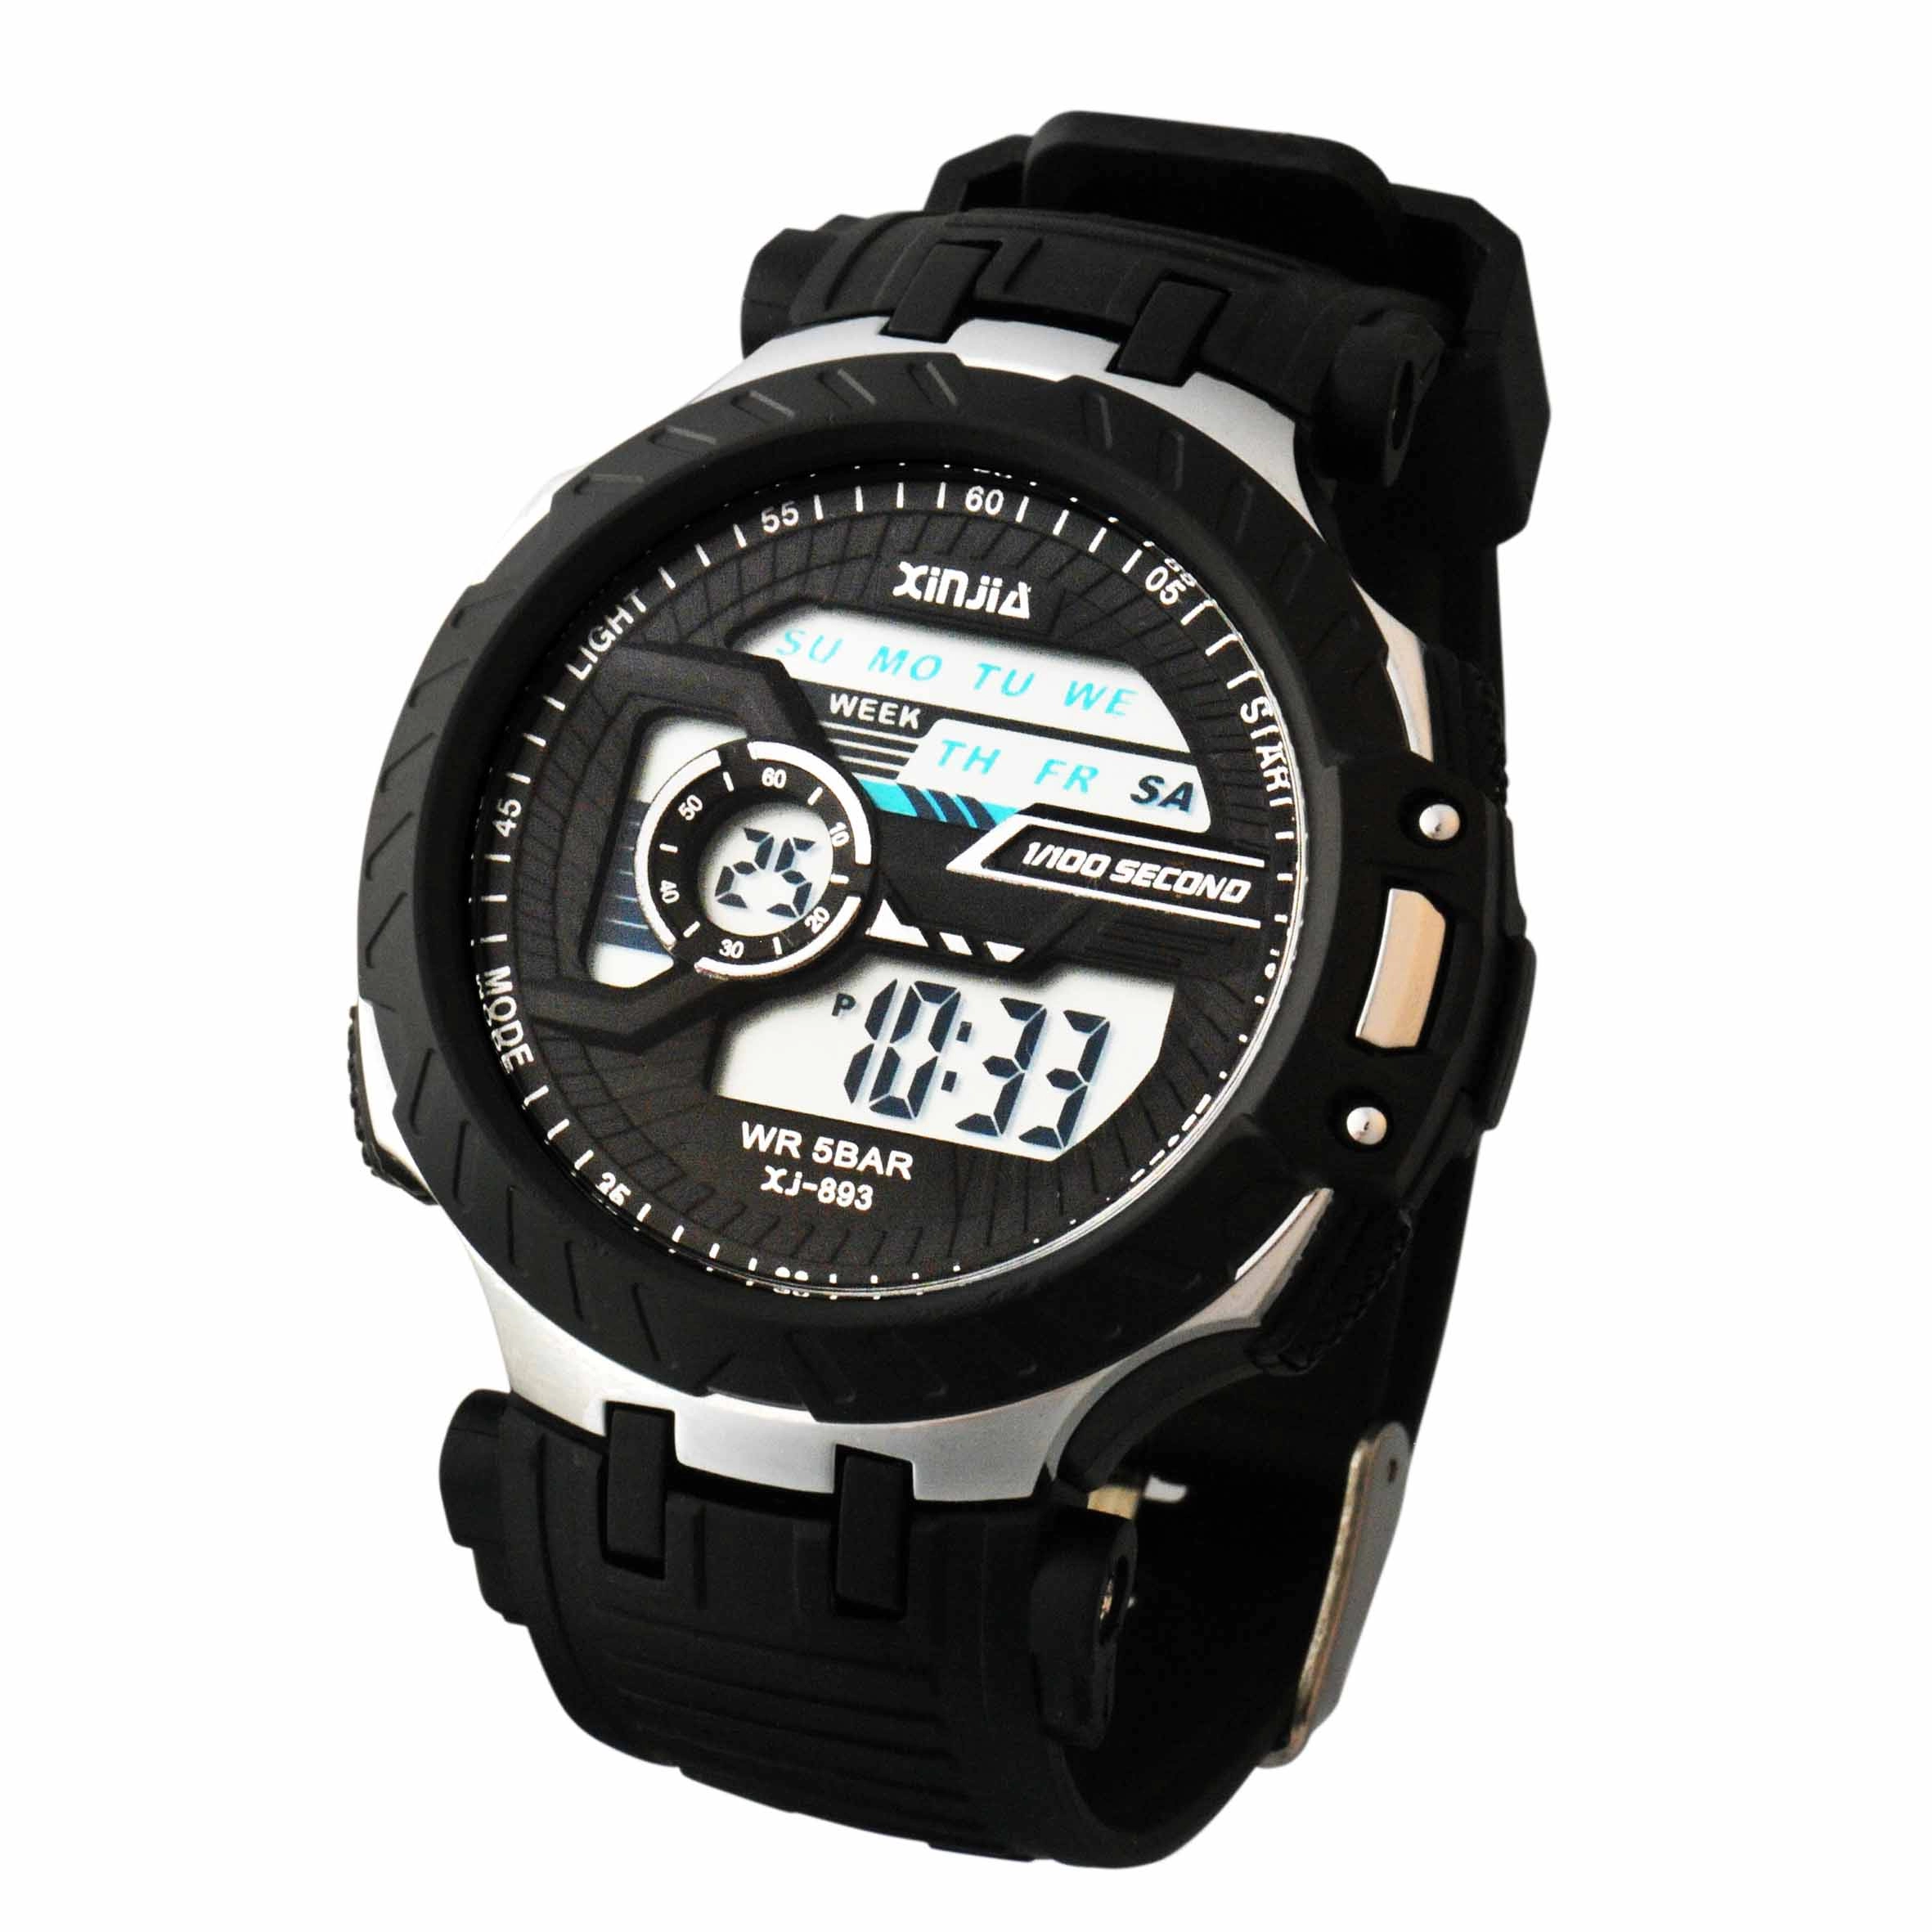 Shining Series Cool Boy Water Resistant Digital Wrist Watch